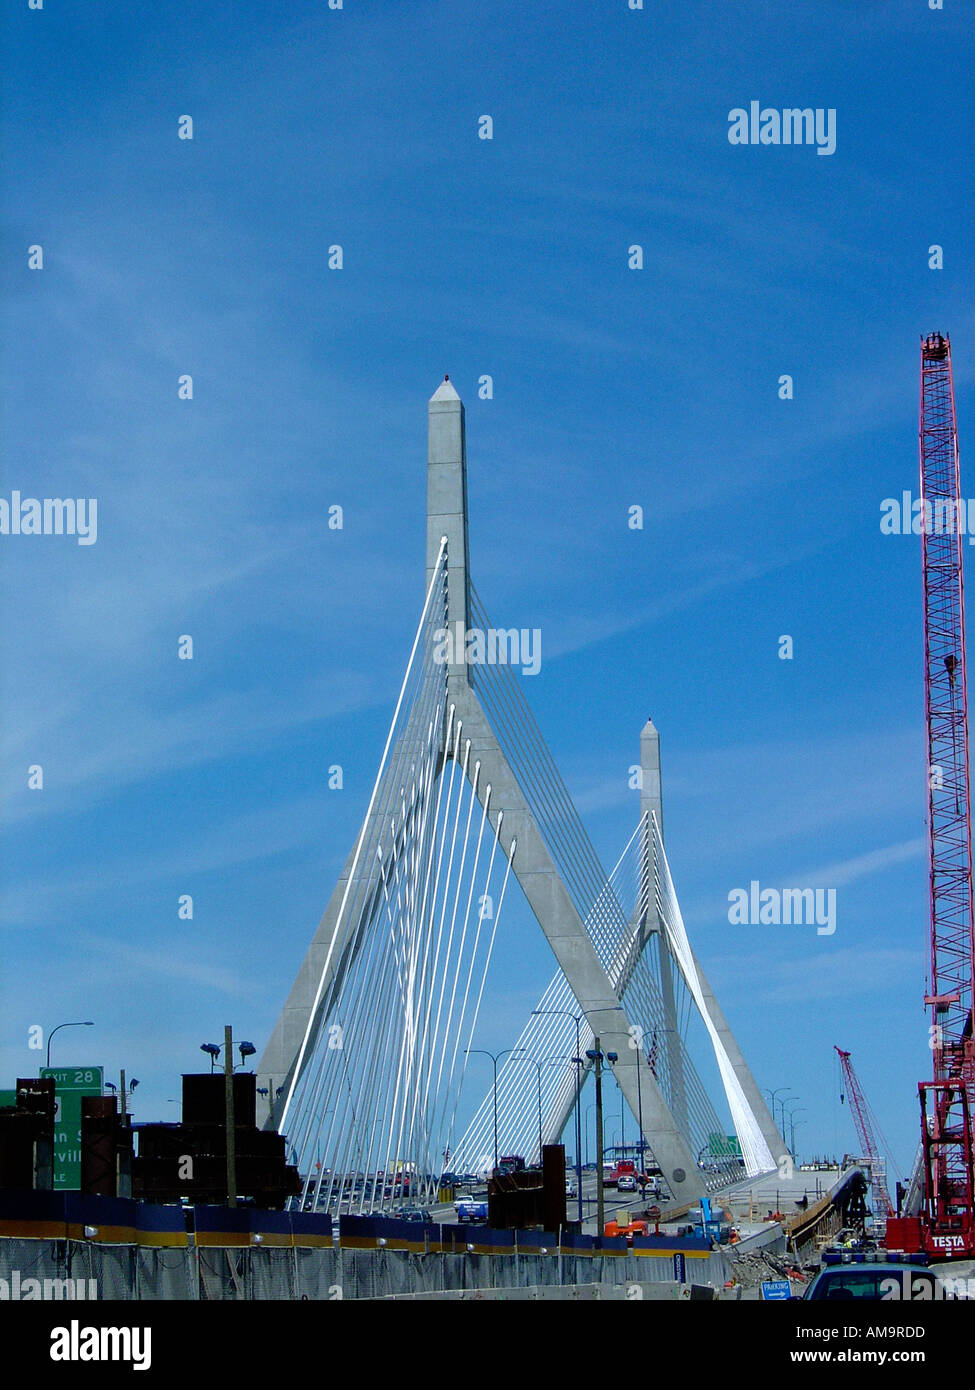 Urban Scene of a Construction Crane and The Leonard P Zakim Bunker Hill Memorial Bridge in Boston Massachusetts USA Stock Photo